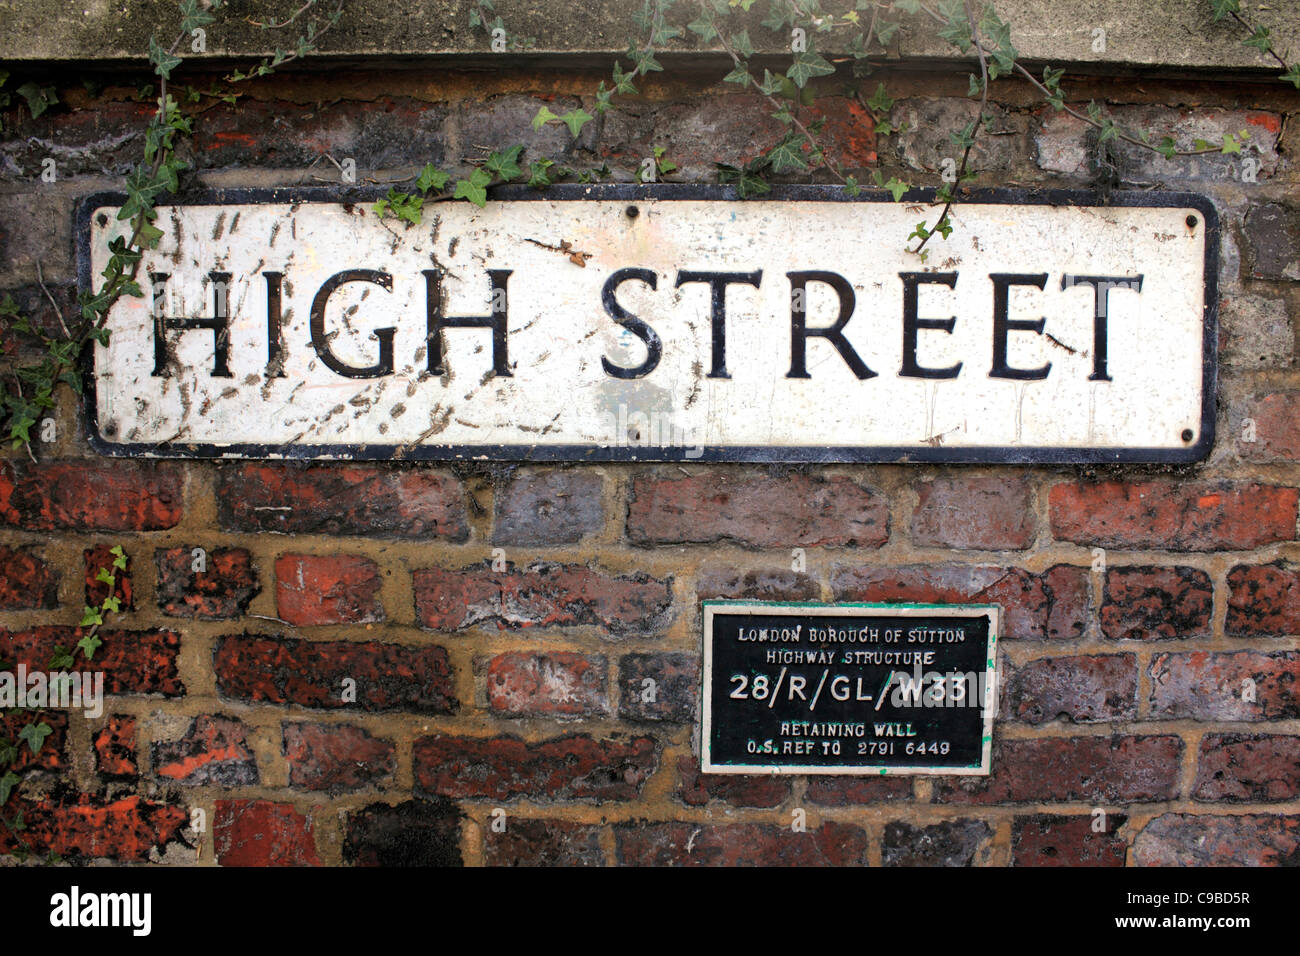 High street road sign Carshalton Sutton South London England UK Stock Photo